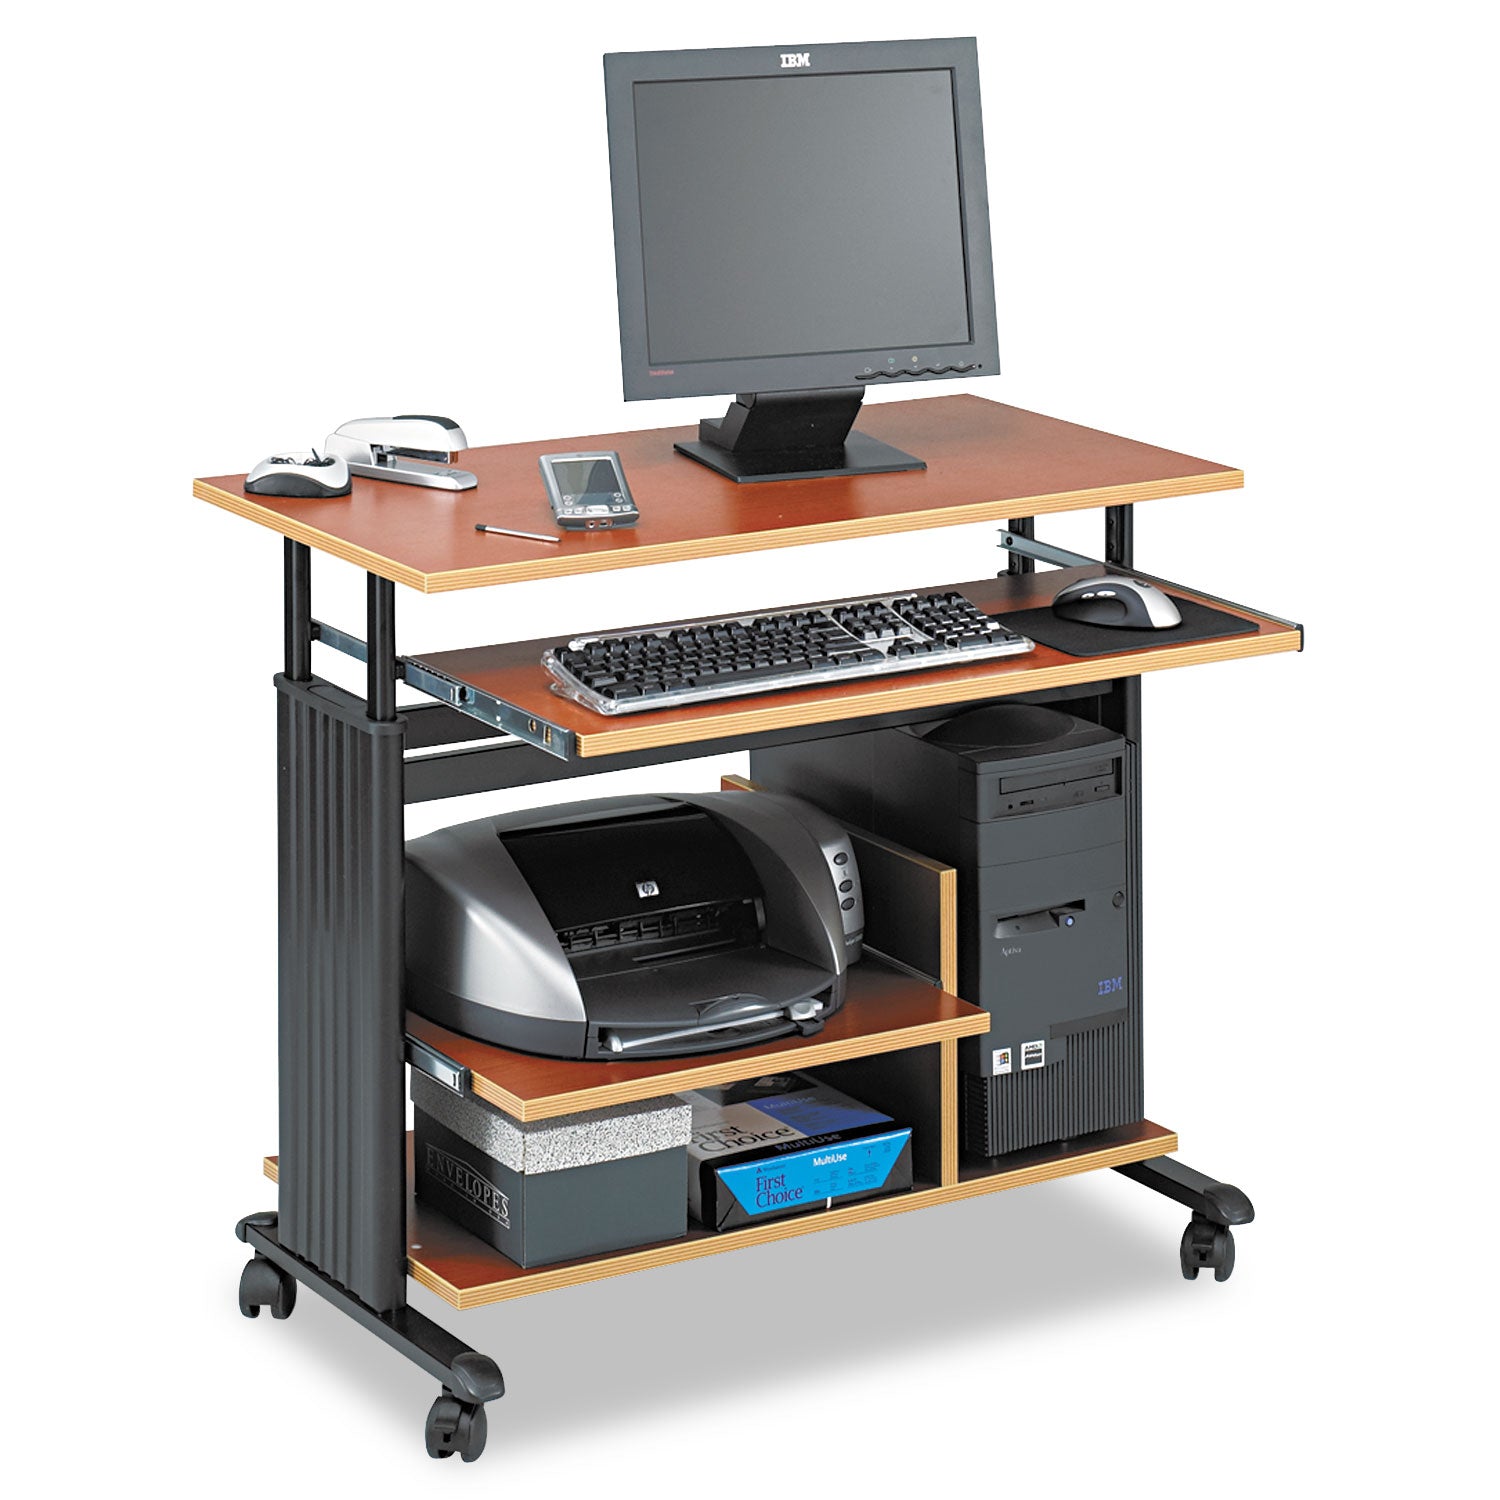 Muv 28" Adjustable-Height Mini-Tower Computer Desk, 35.5" x 22" x 29" to 34", Cherry/Black - 